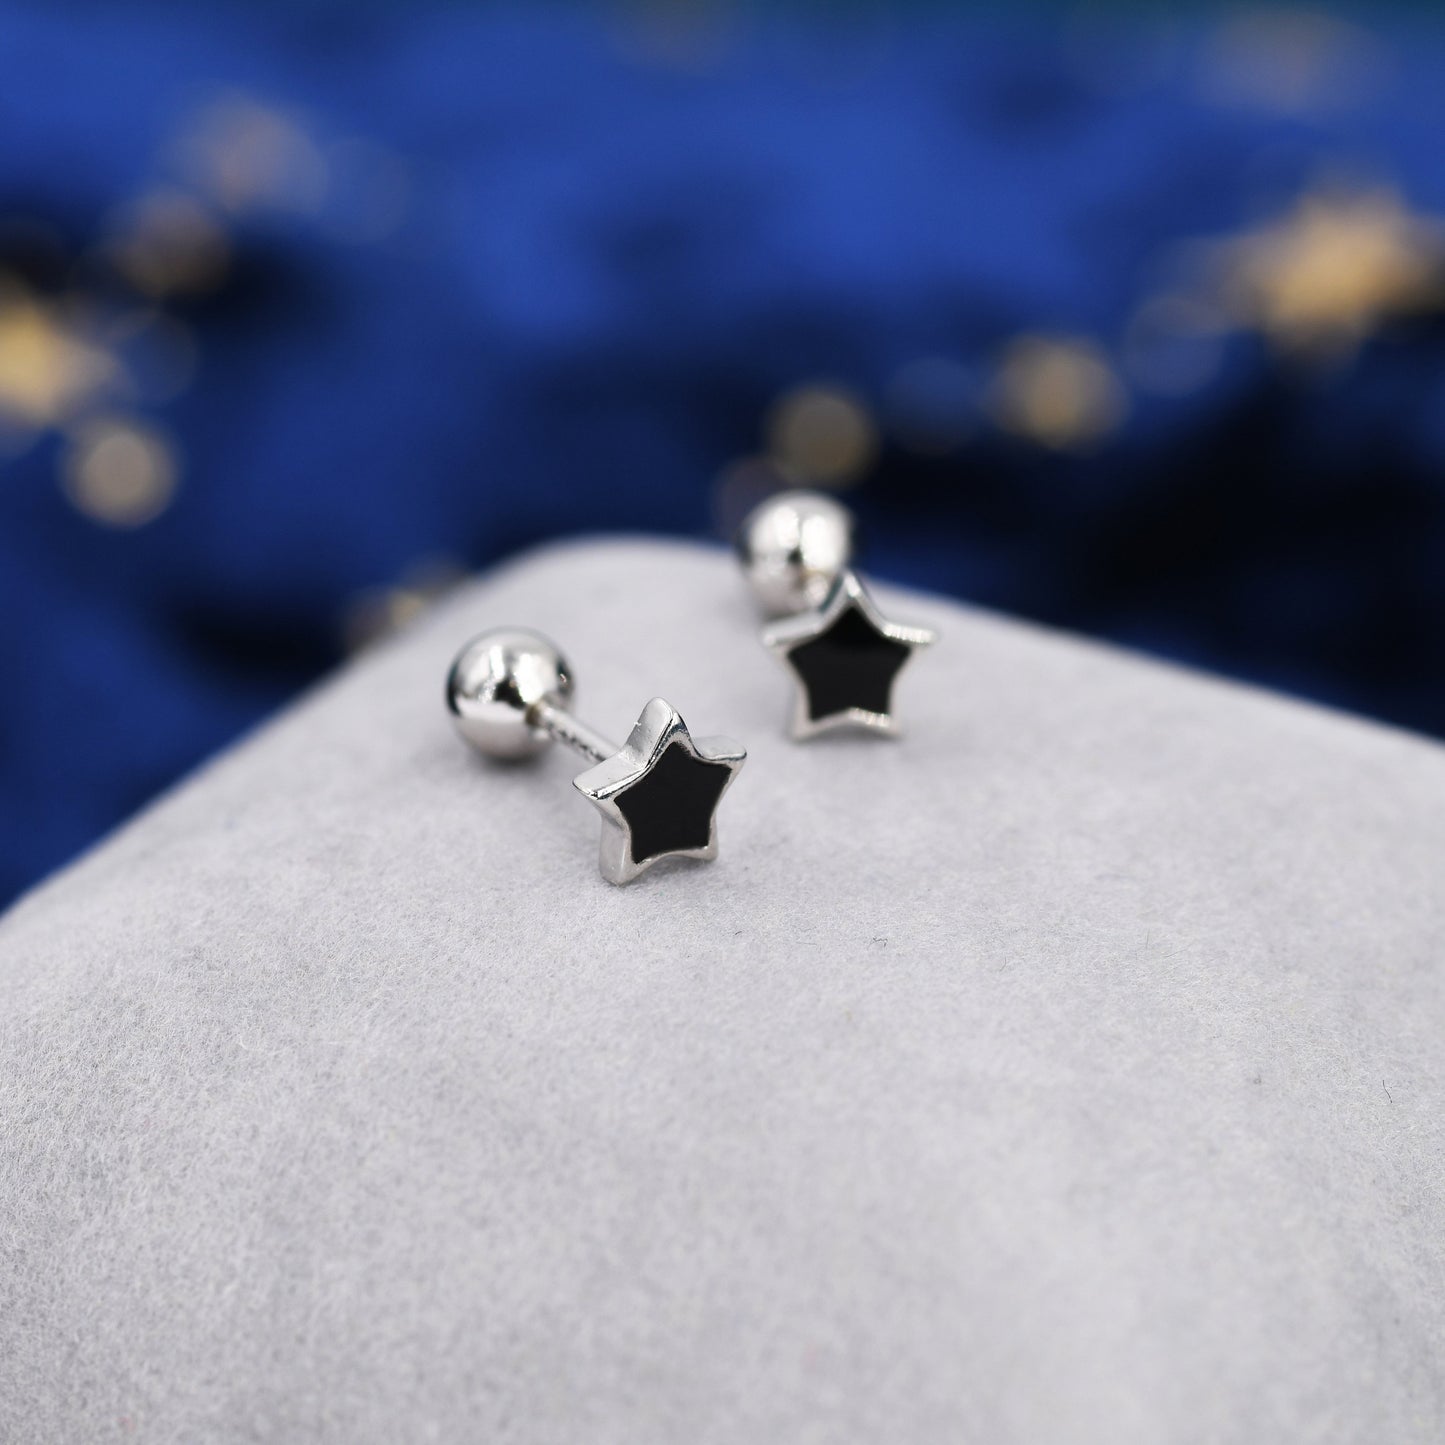 Tiny Black Enamel Star Barbell Earrings in Sterling Silver, Silver or Gold, Screw Back Black Star Earrings, Screwback Earrings